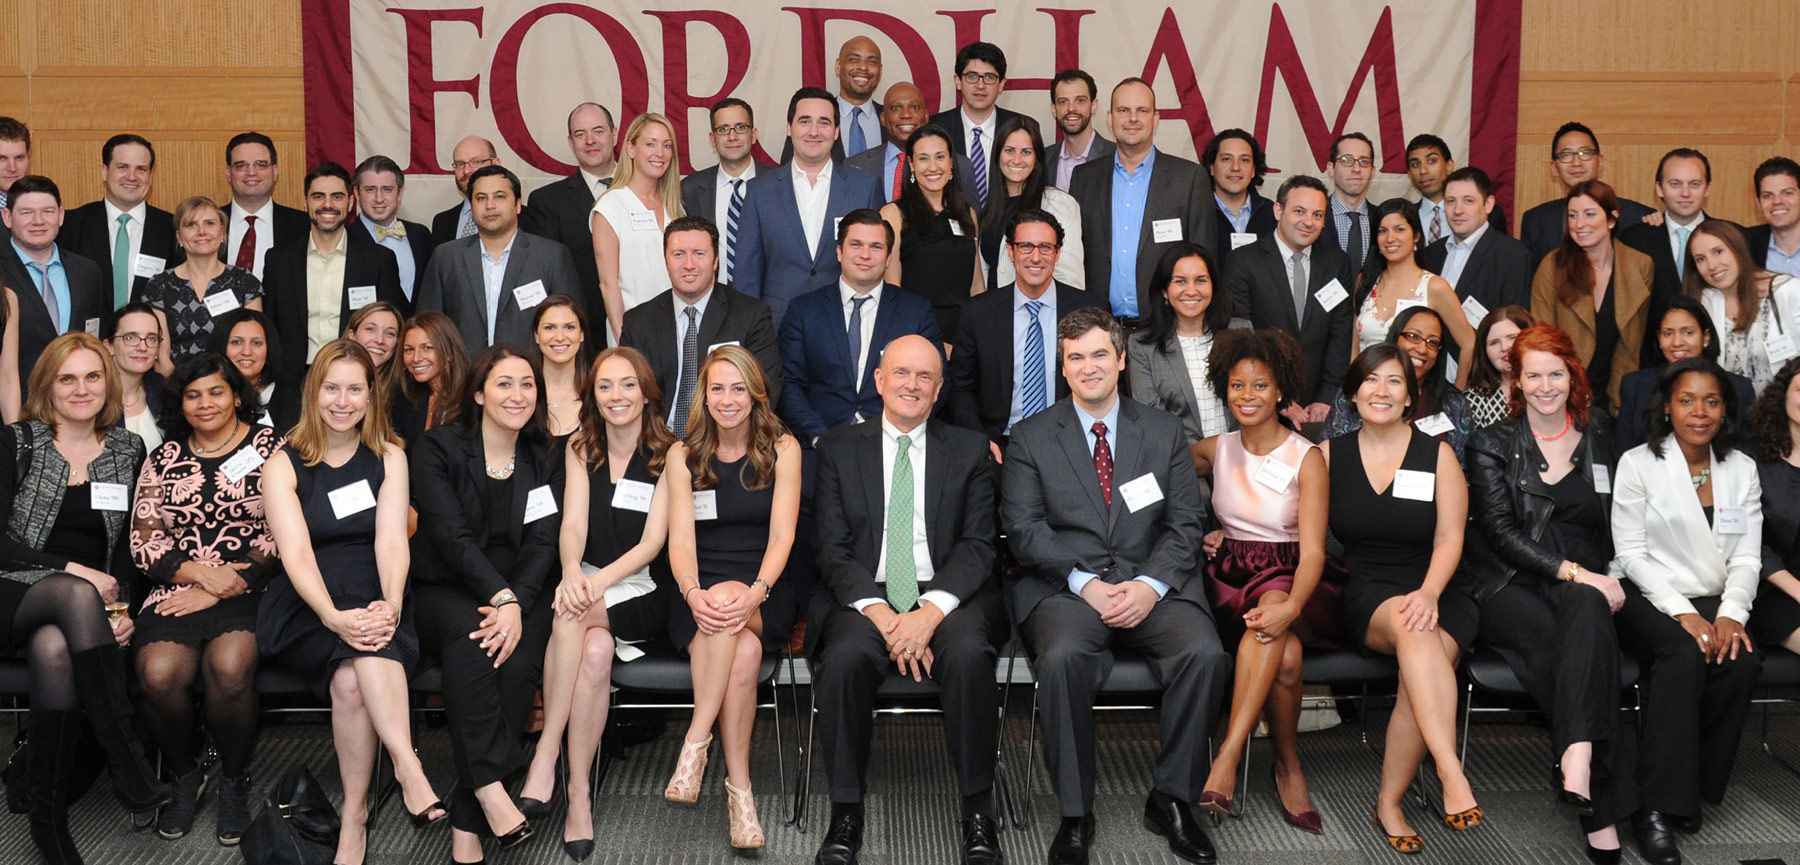 FLS Fordham Law Alumni Reunion 2015